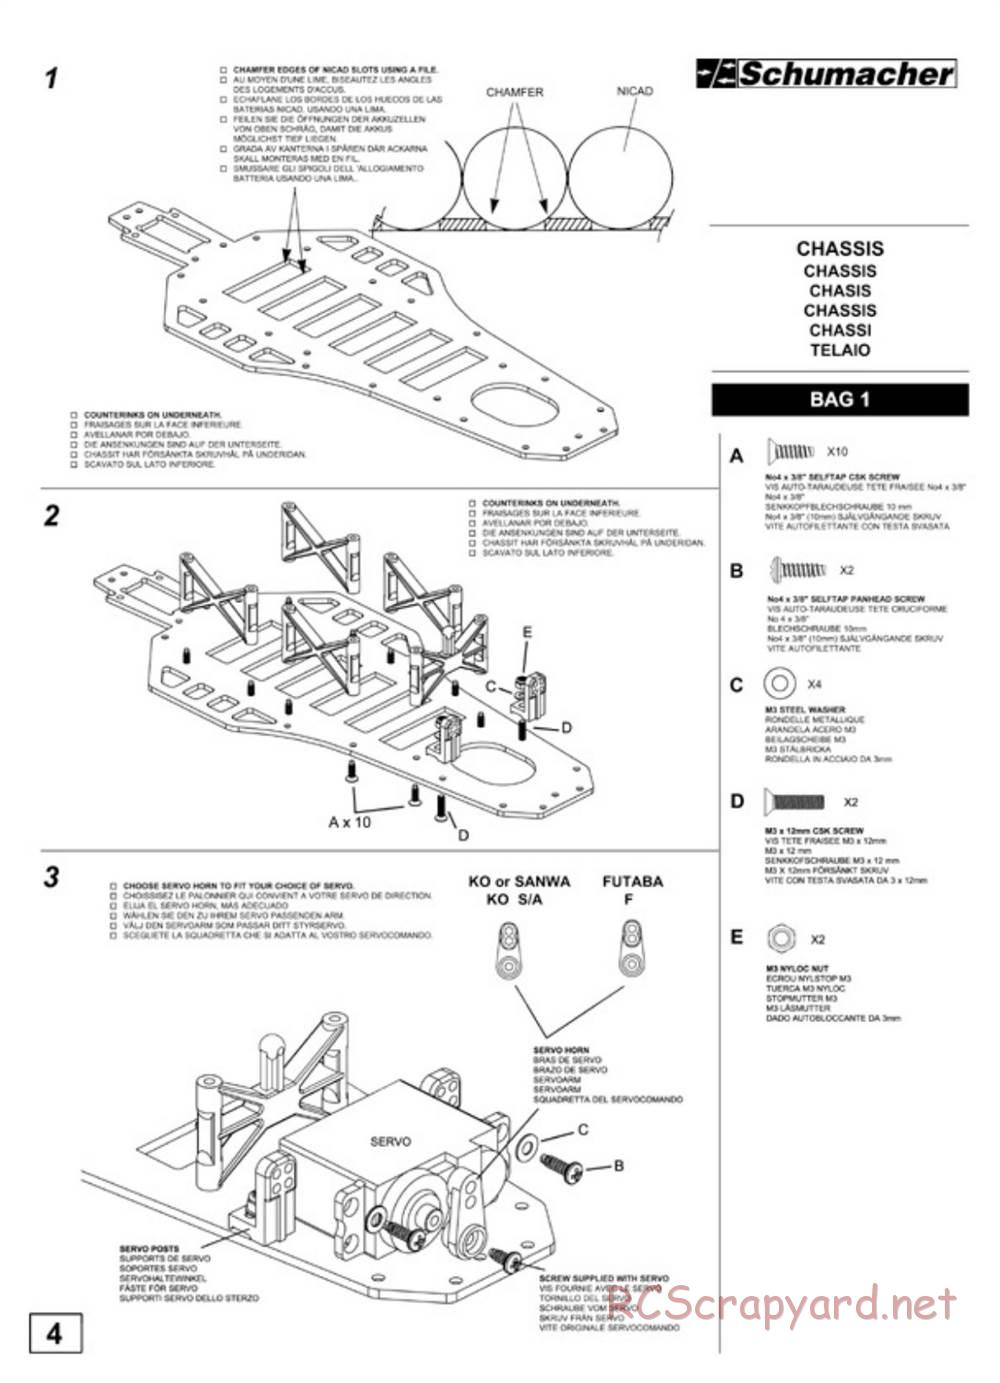 Schumacher - Fireblade Evo - Manual - Page 6